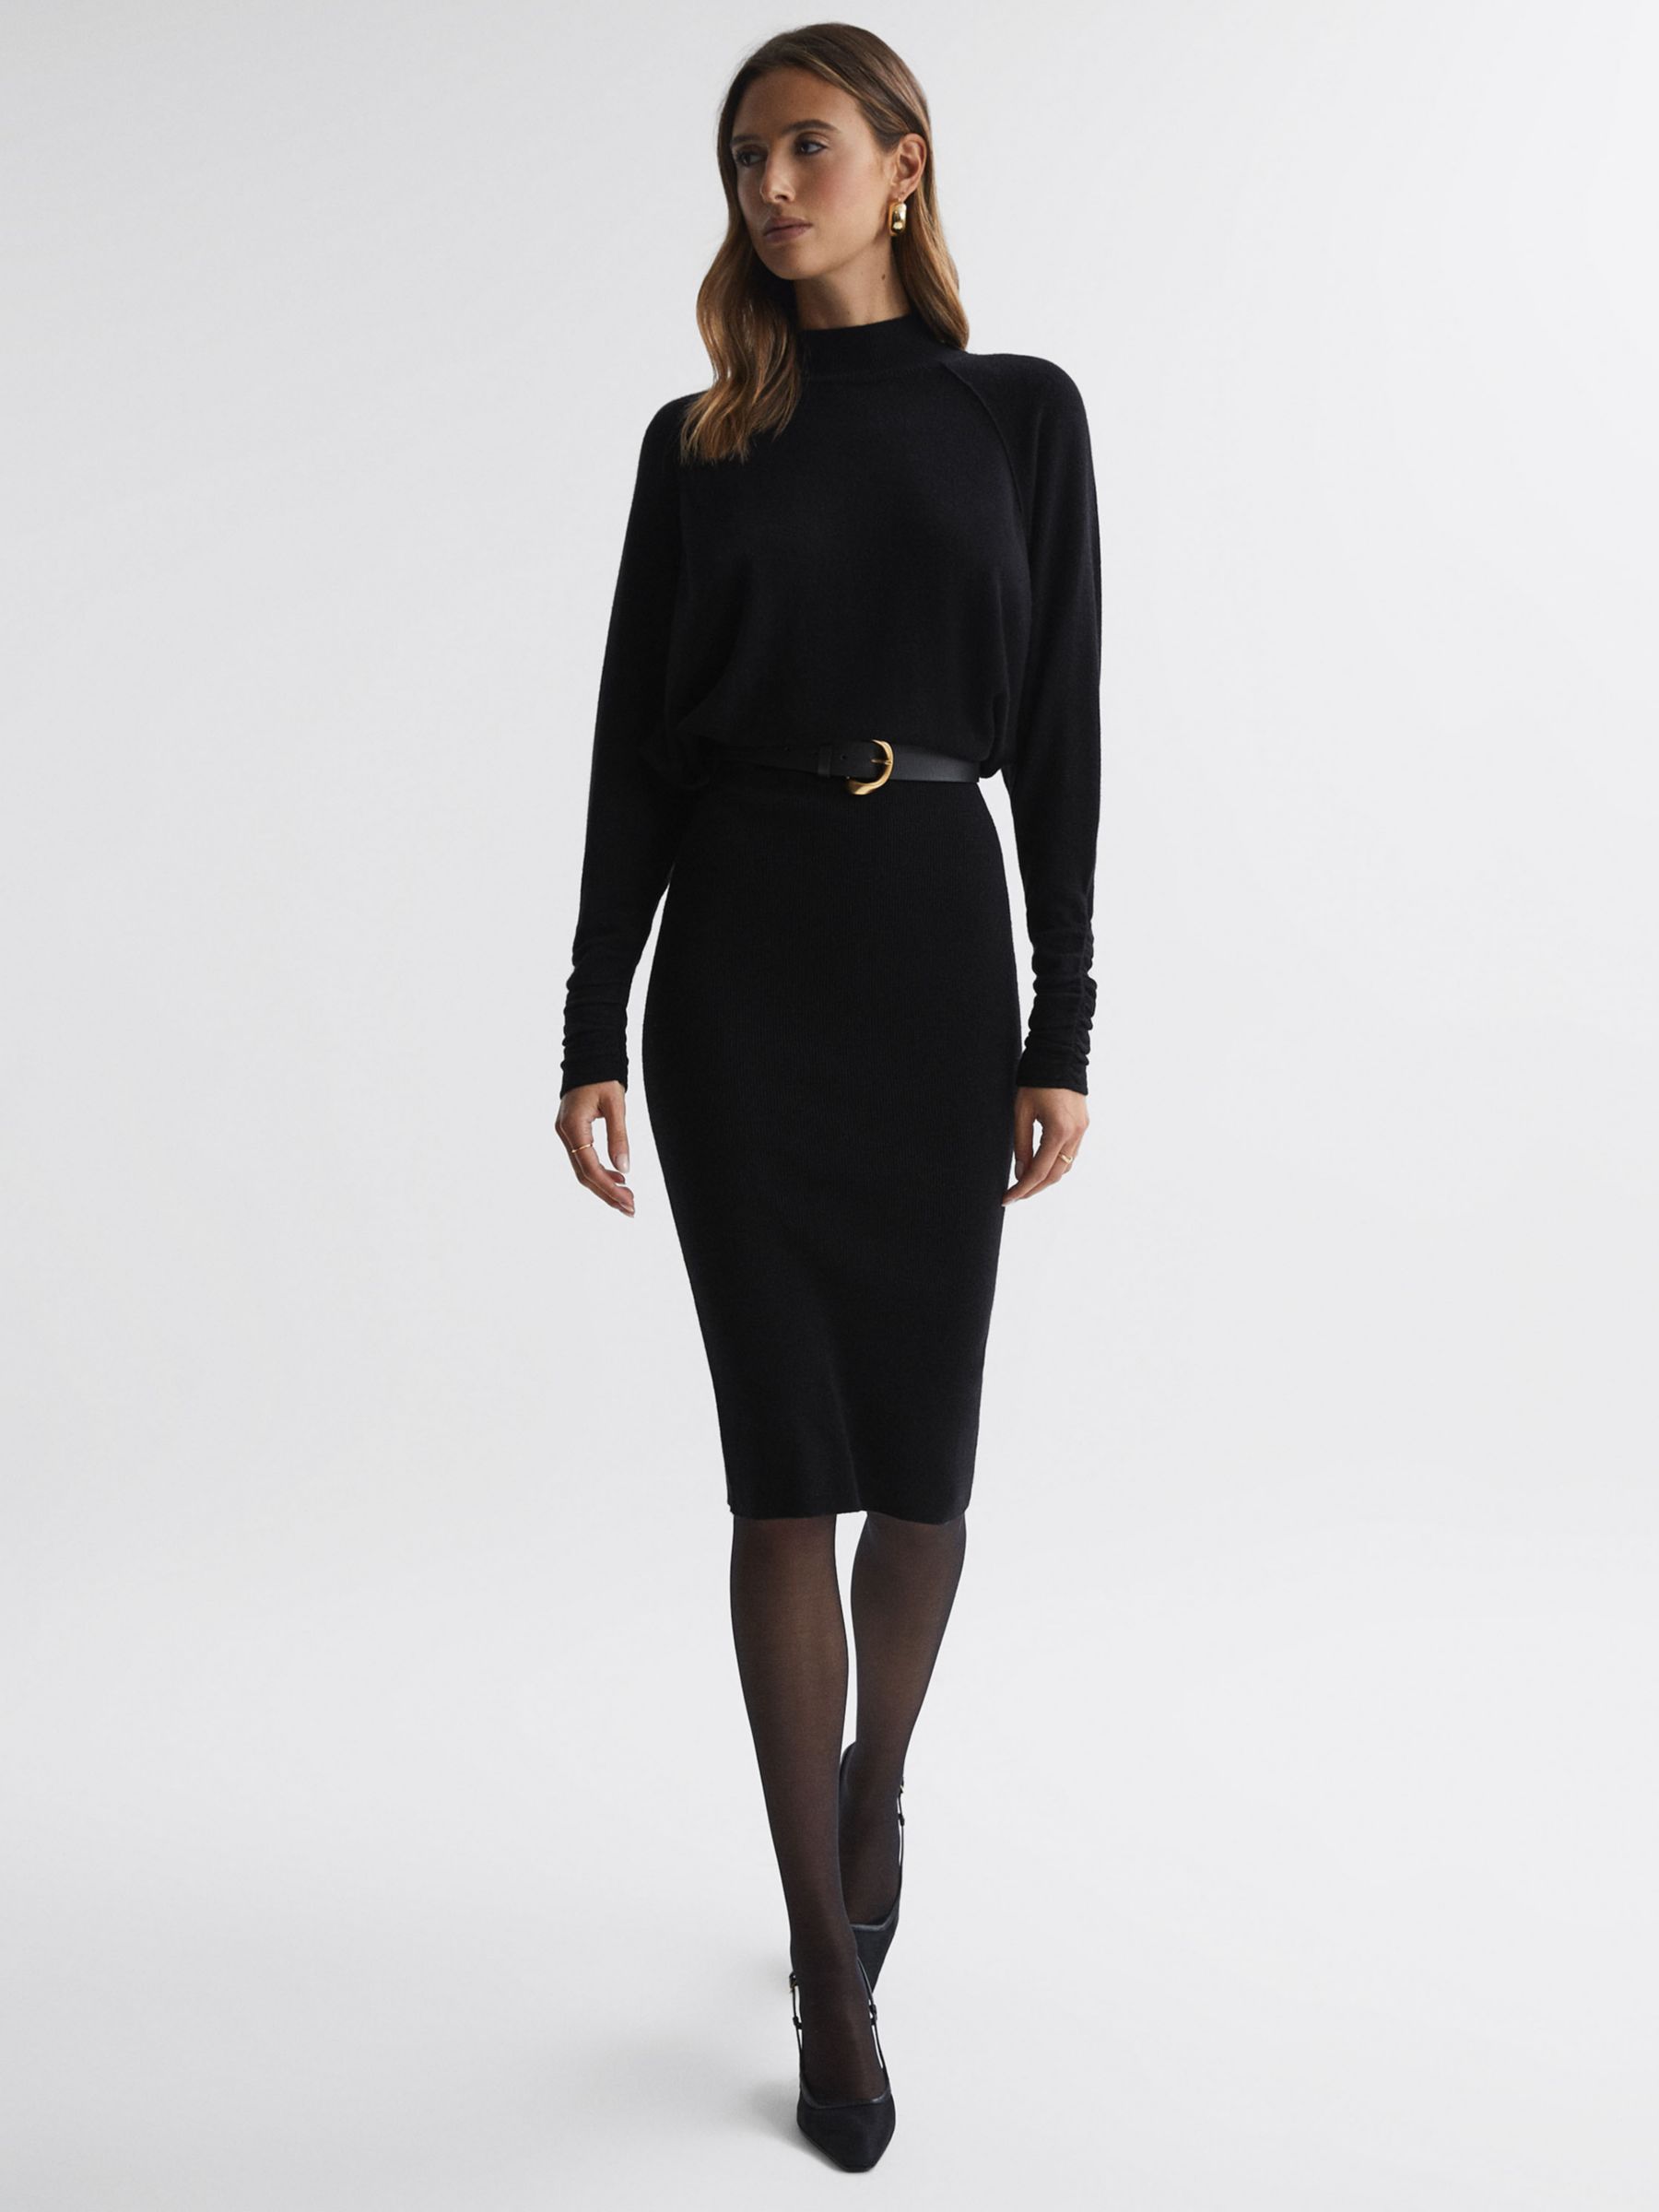 Reiss Freya Knitted High Neck Dress, Black at John Lewis & Partners